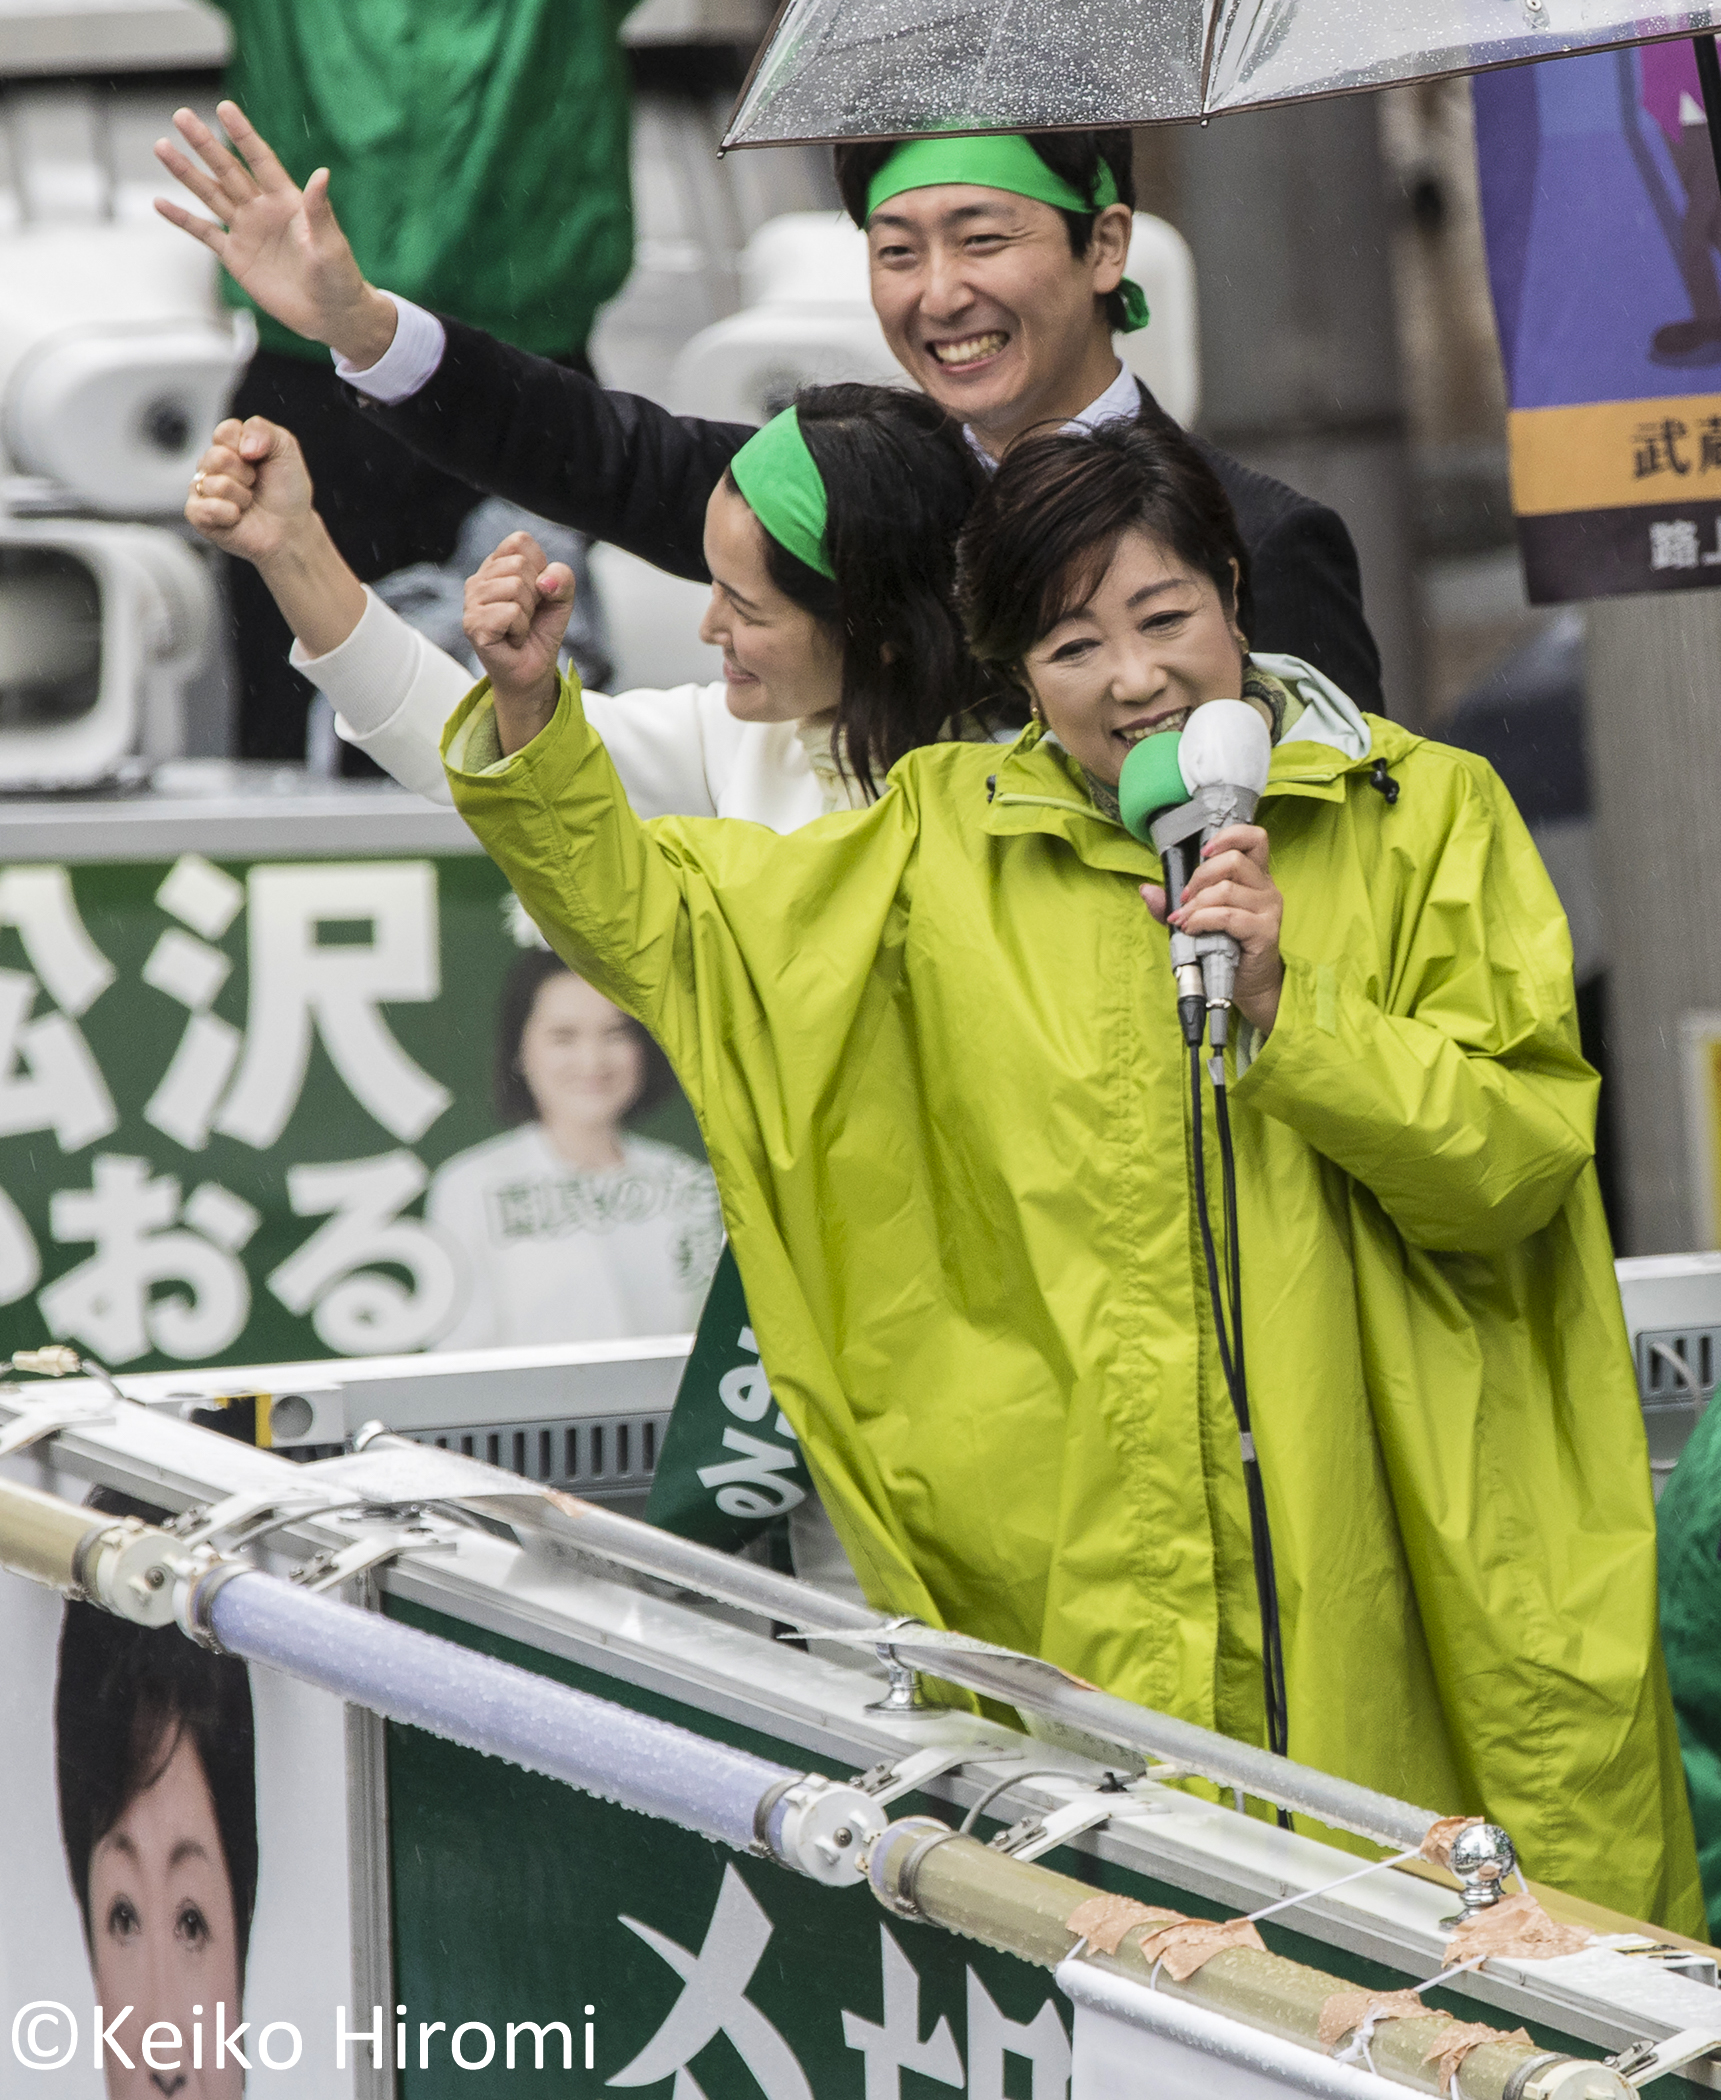  Yuriko Koike, Tokyo Governor and leader of Party of Hope, campaigning in Shinjuku, Tokyo, Japan on October 15, 2017. 